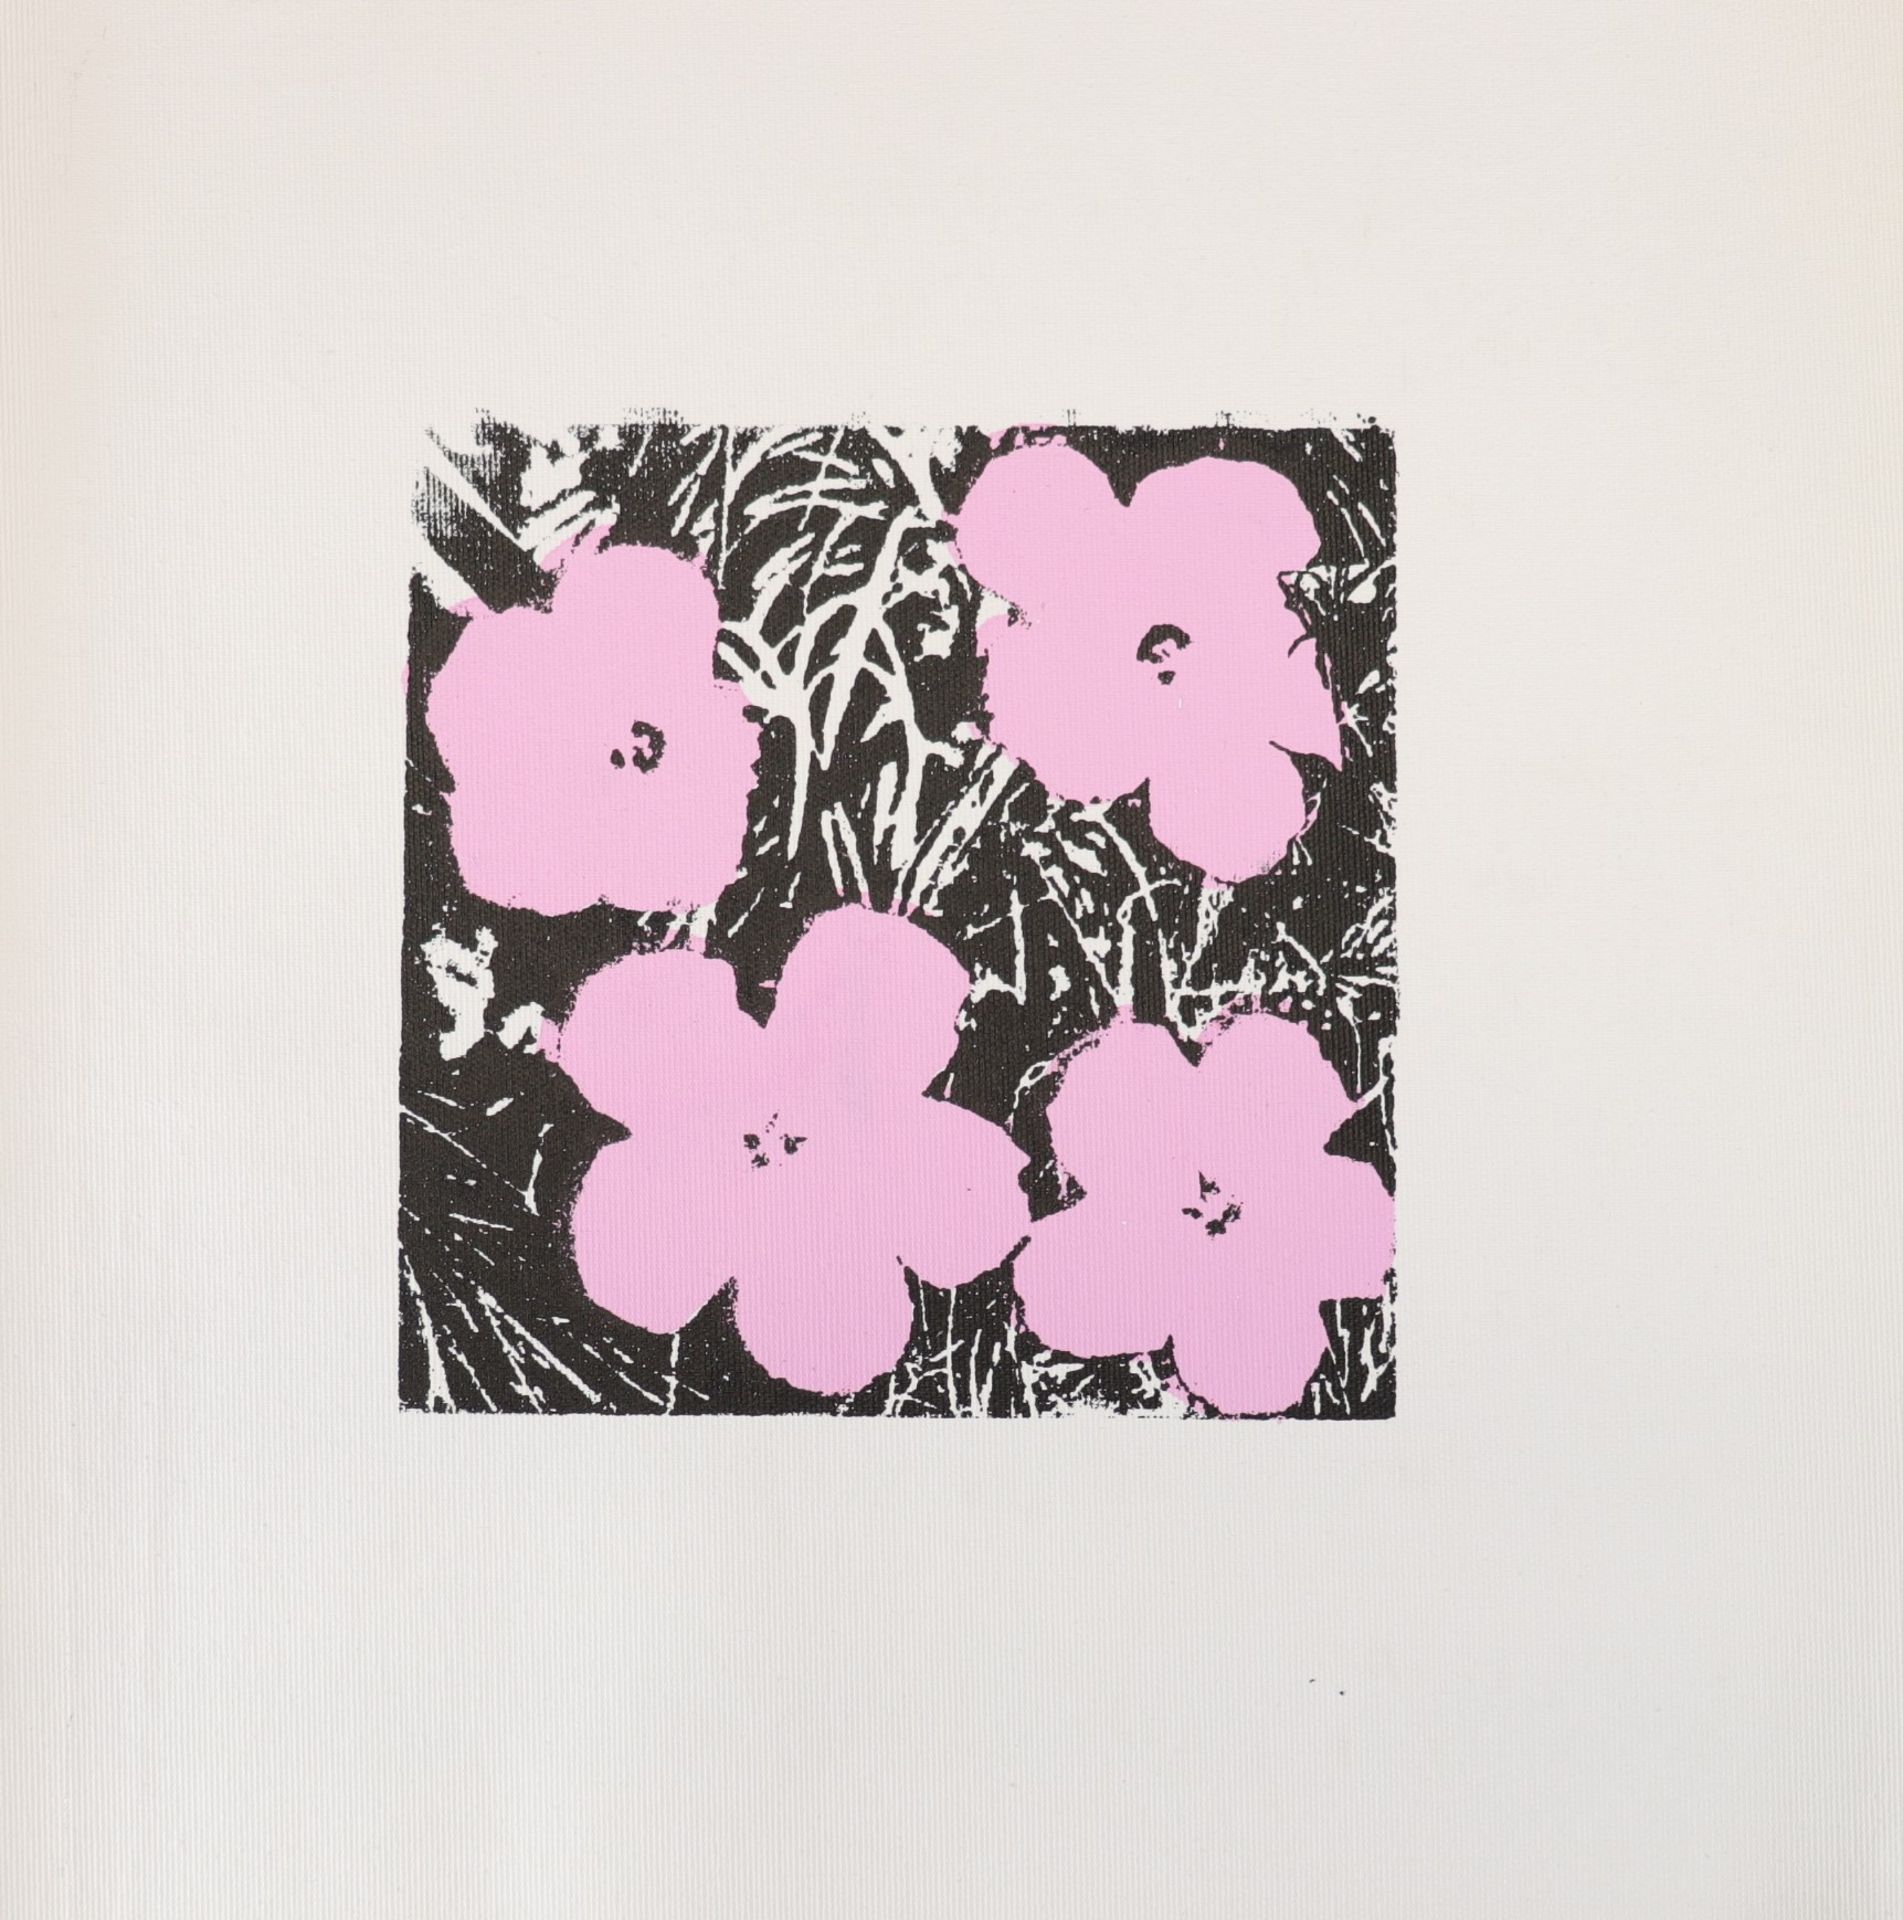 Andy Warhol. Flowers. Black, white and pink print on linen. Bears the â€œAndy Warholâ€ signature in